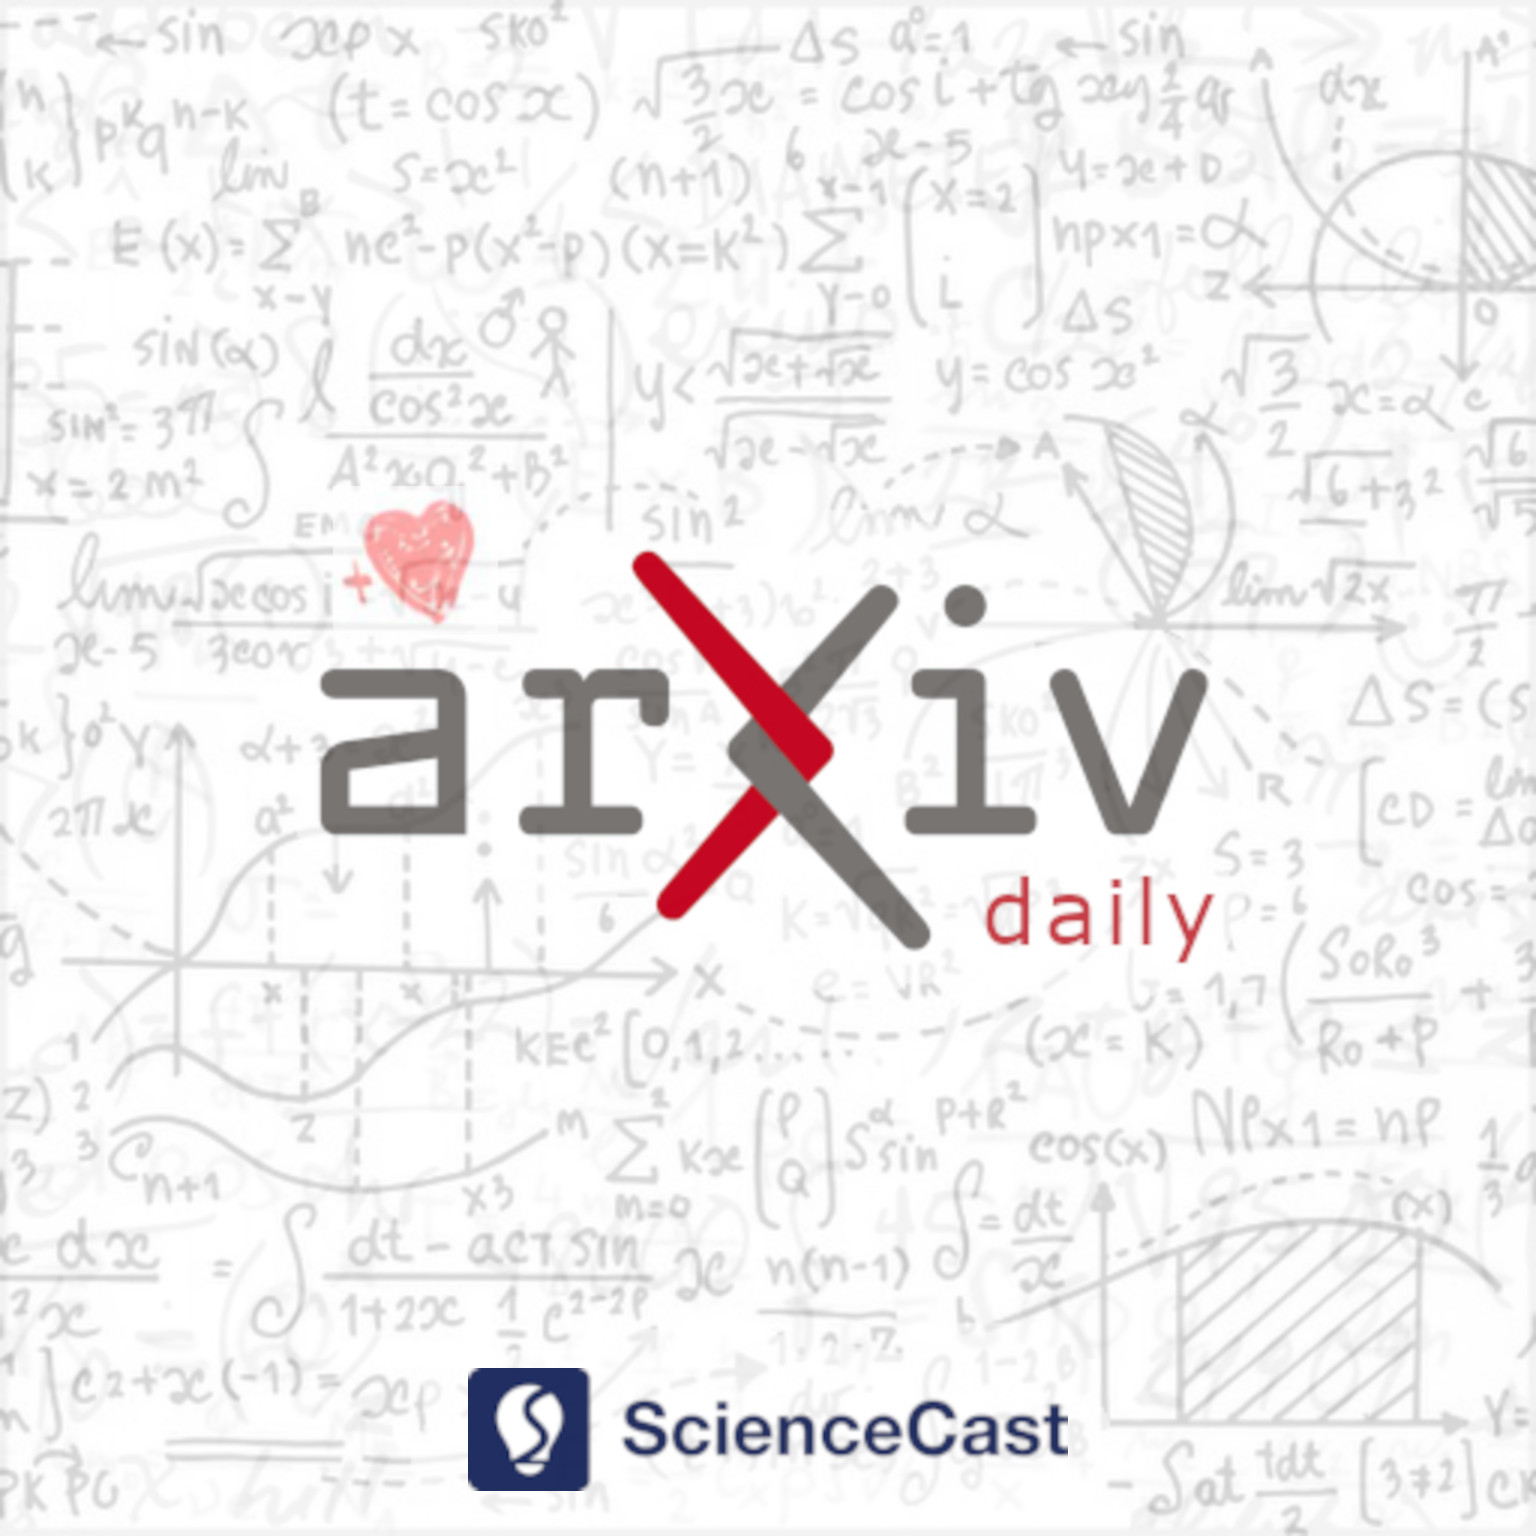 arXiv daily: Quantum Physics